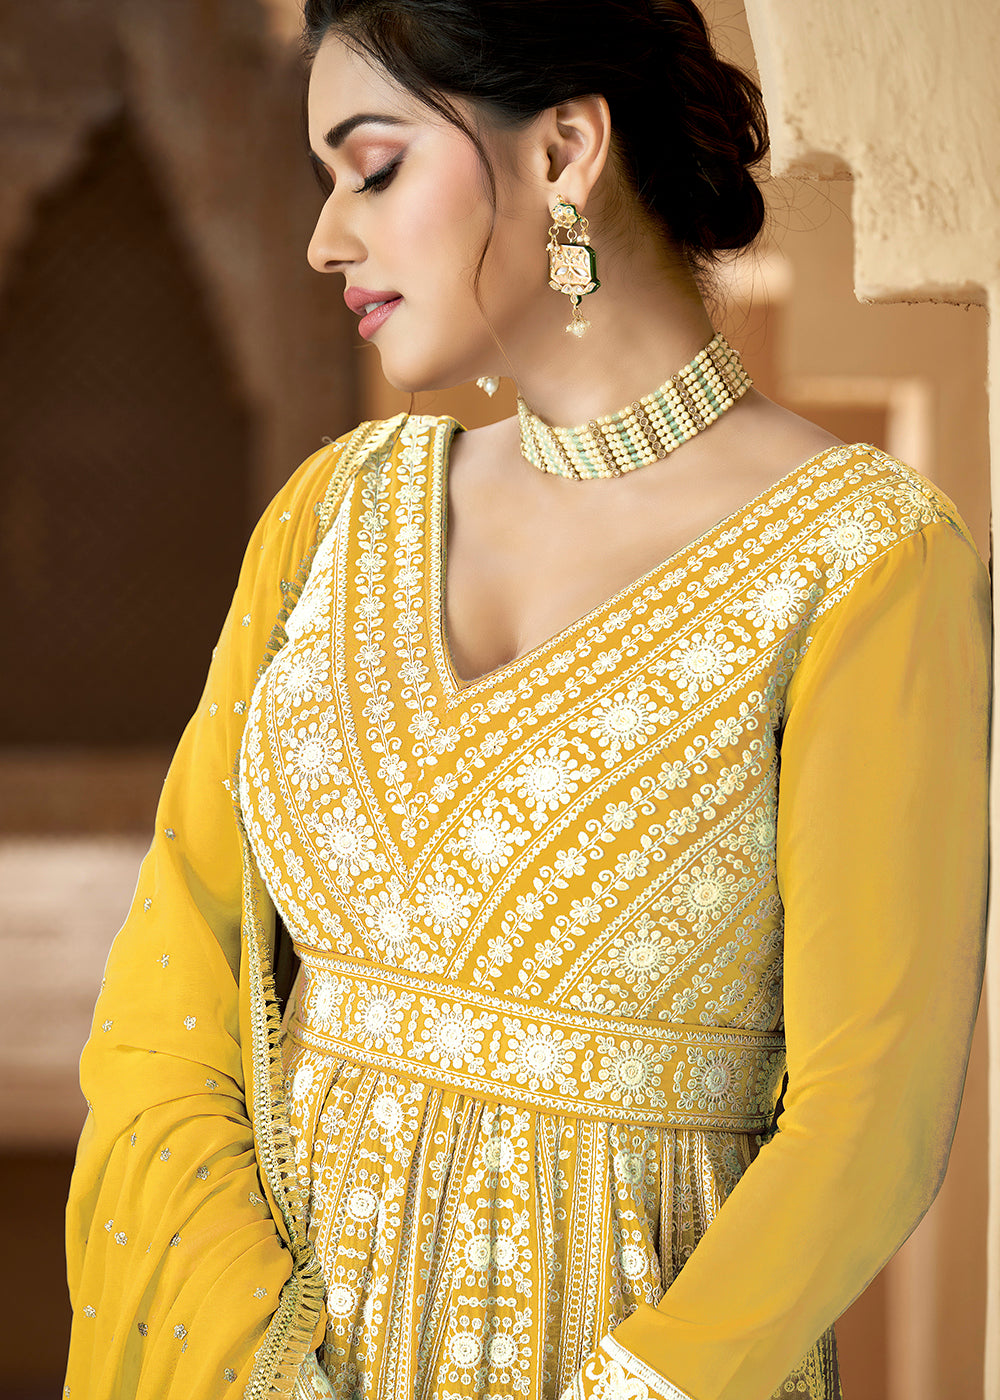 Buy Now Lucknowi Floor Length Corn Yellow Ethnic Anarkali Suit Online in USA, UK, Australia, New Zealand, Canada, Italy & Worldwide at Empress Clothing. 